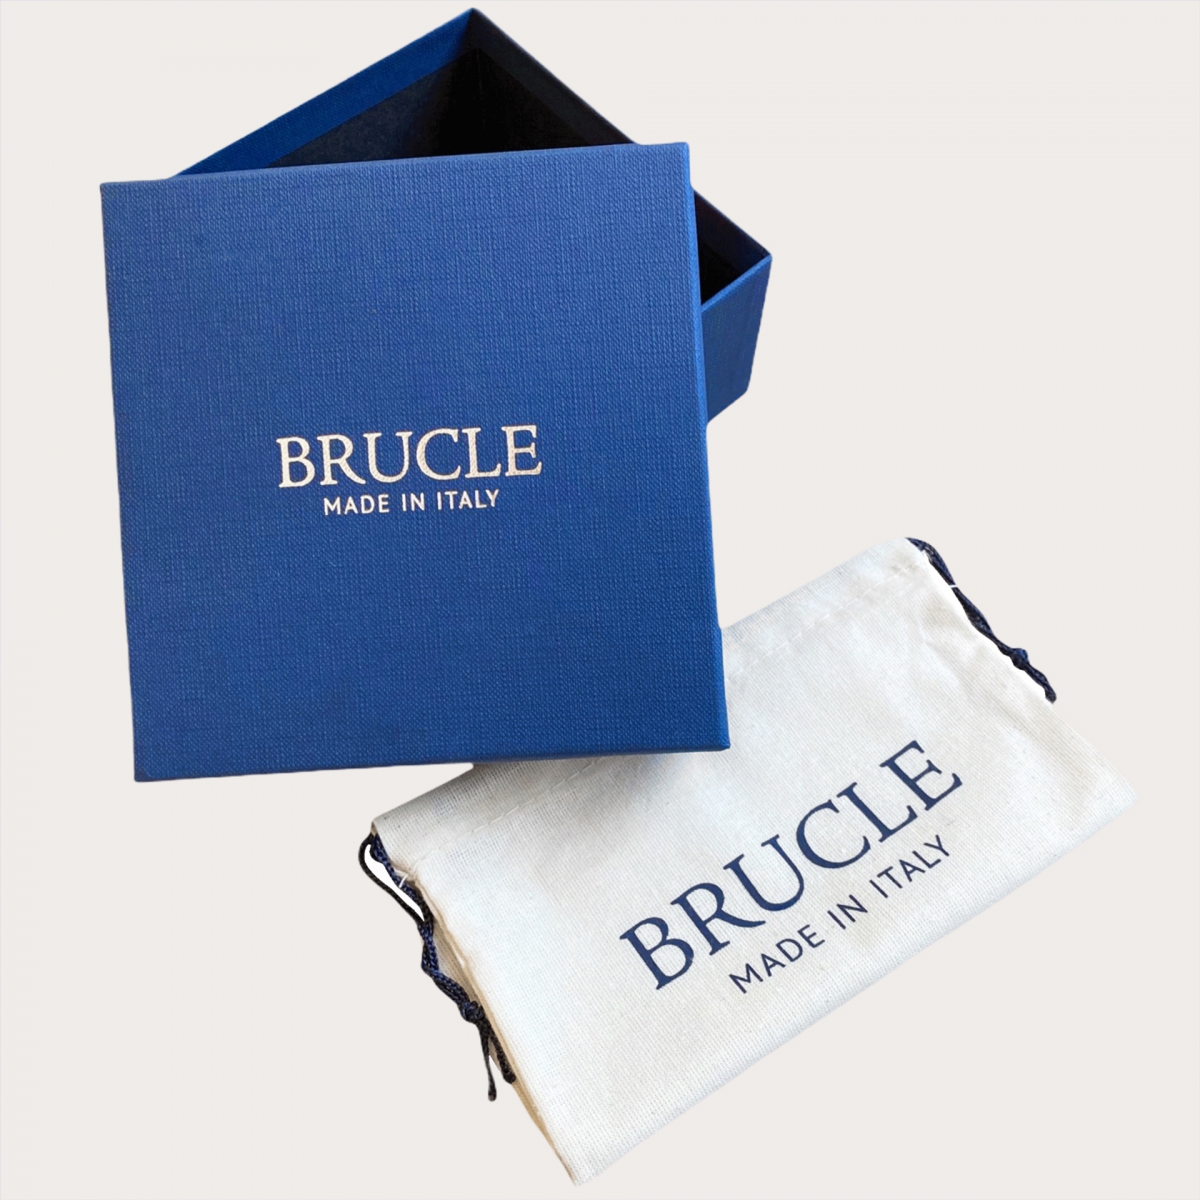 BRUCLE Luxus-Gürtel in Karibikblauer Krokodilleder